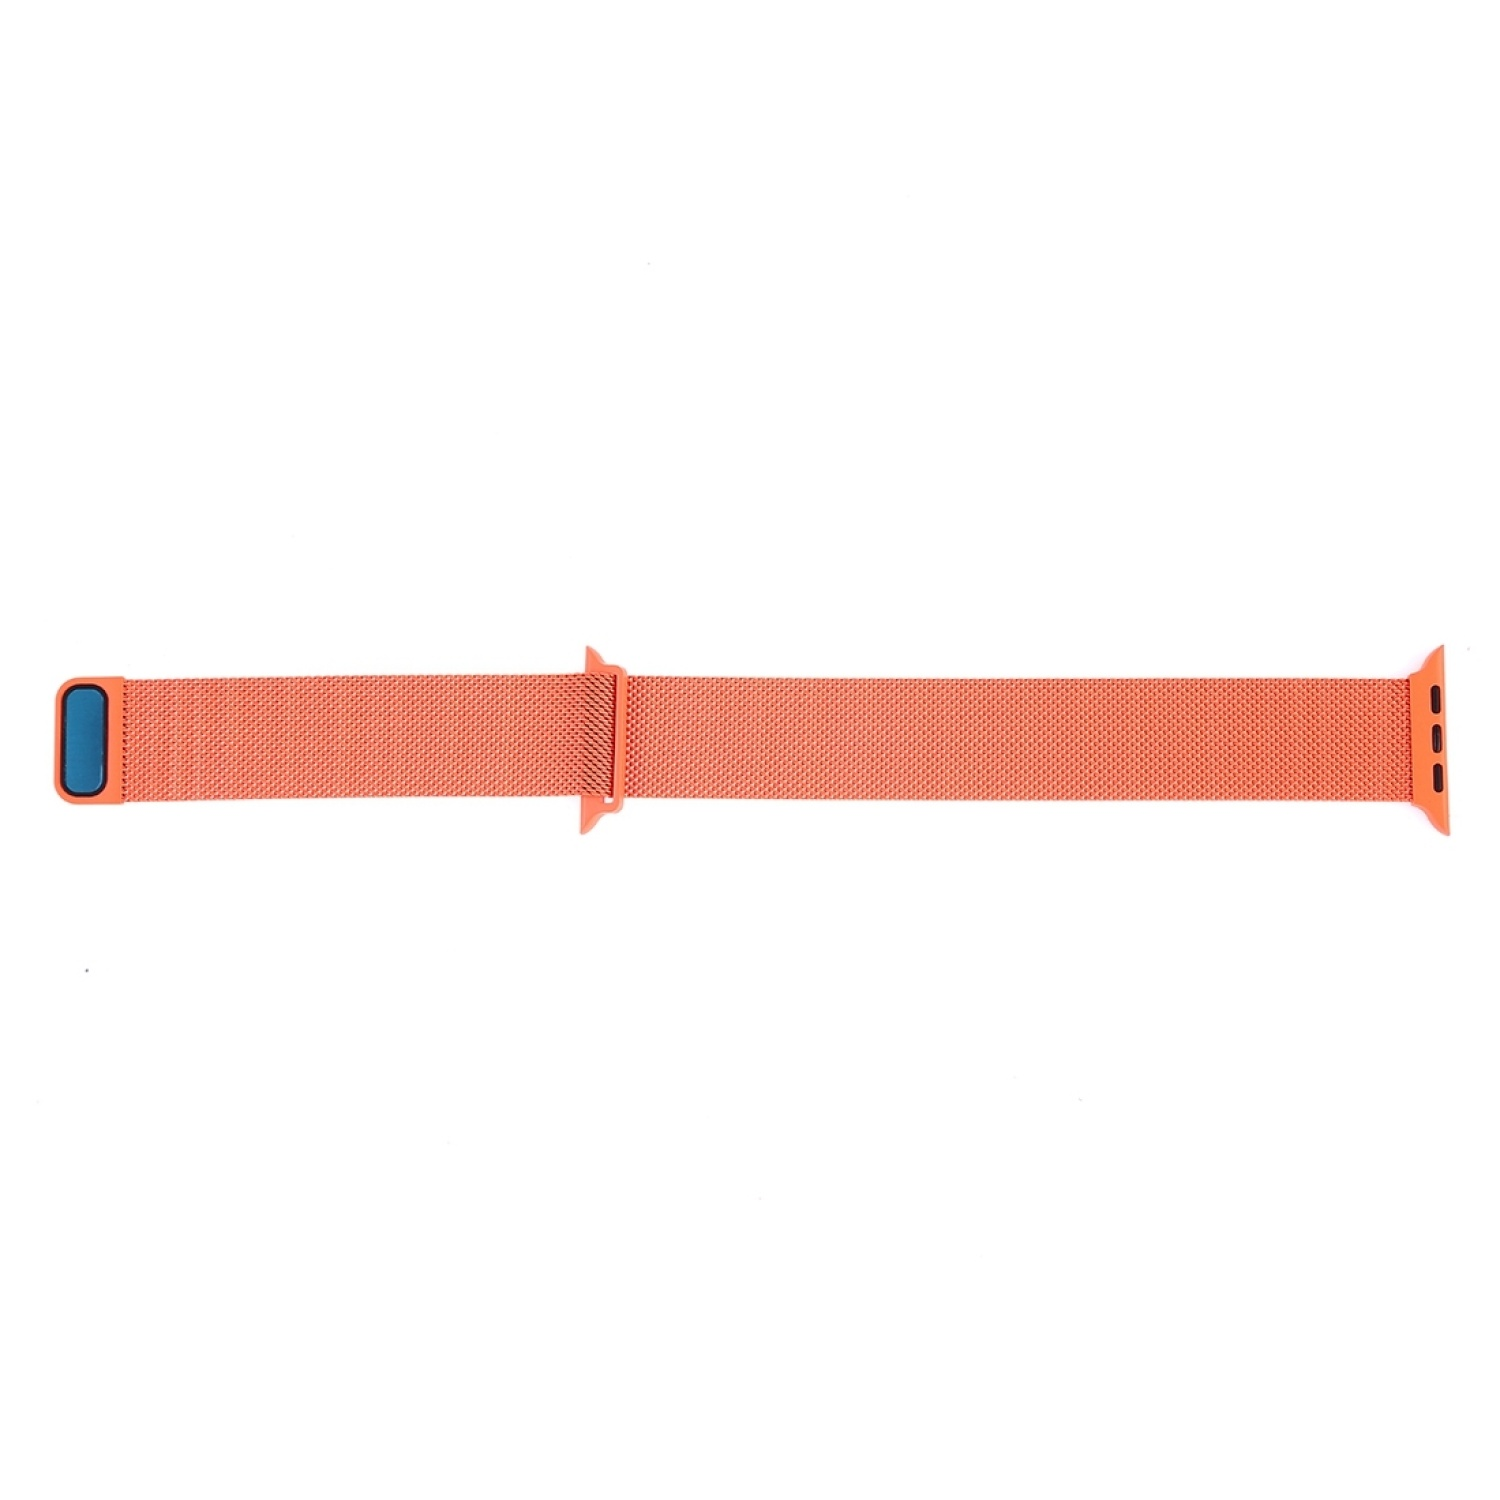 KÖNIG DESIGN Series Apple, Orange 41mm, Watch Smartband, Sportarmband, 7